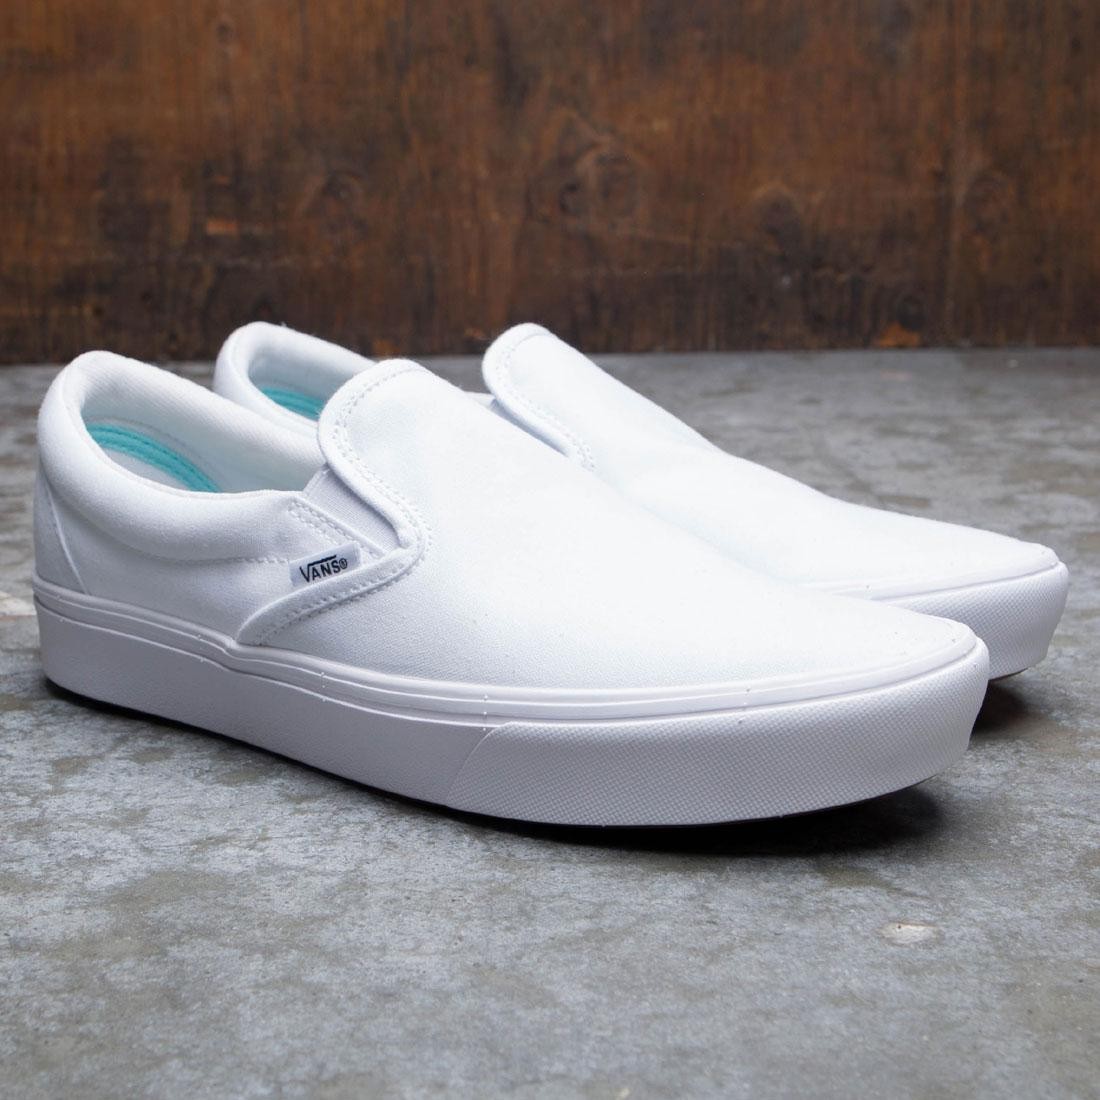 Vans Men Classic Slip-On - Comfy Cush white true white